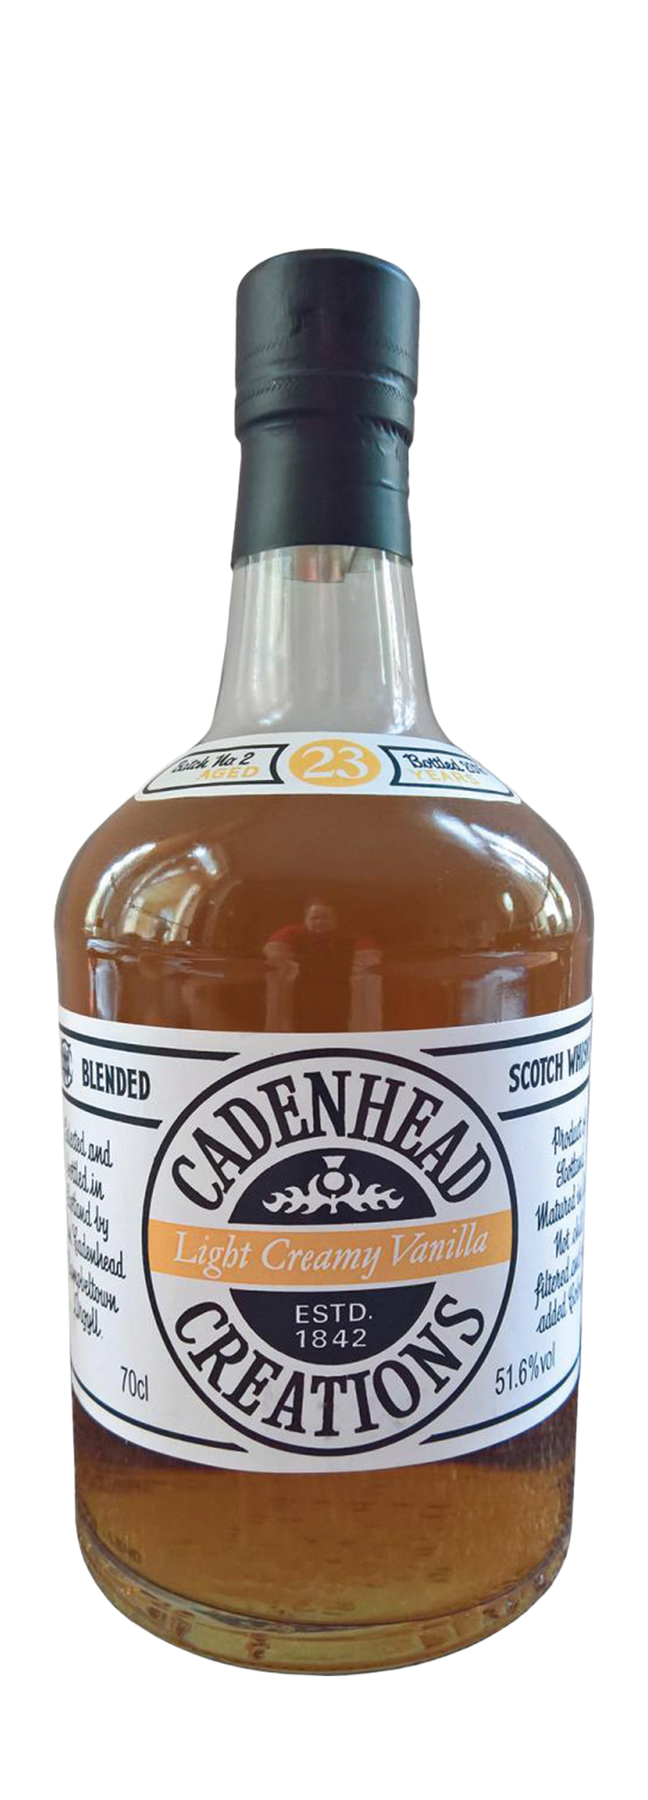 Cadenhead's 23 Years Old Creations Light Creamy Vanilla 51,6% 70cl